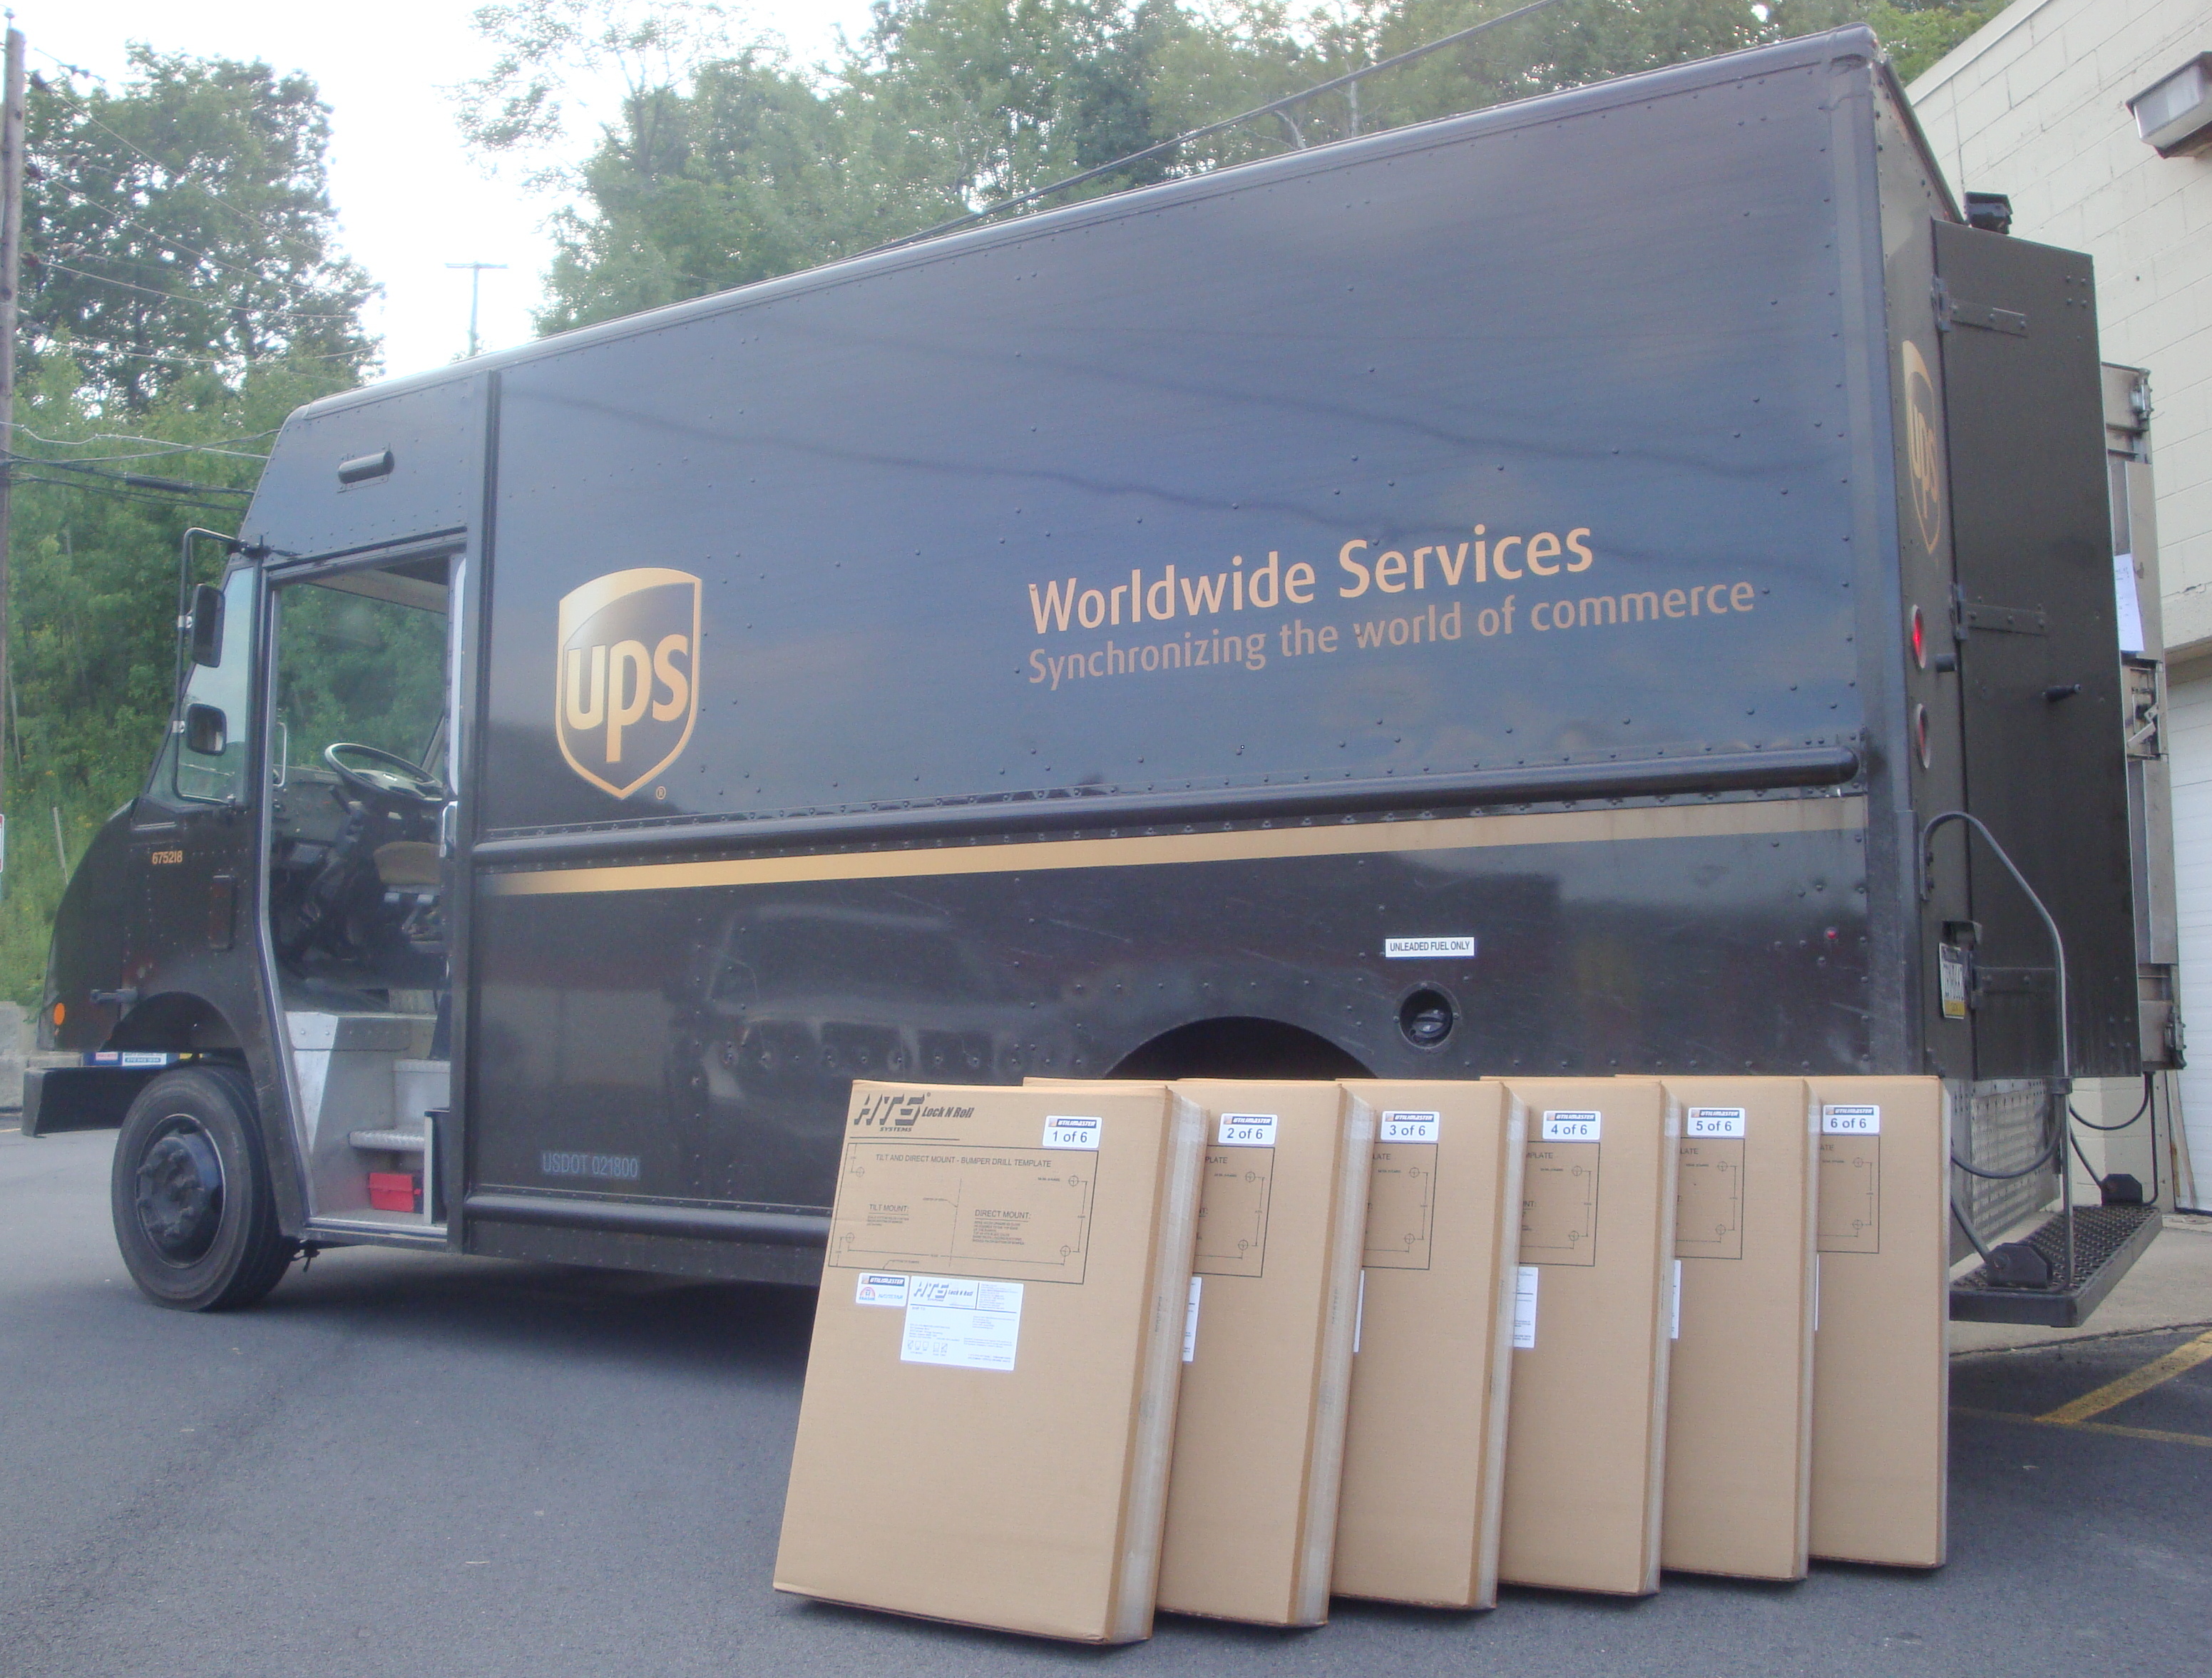 United Parcel Service (UPS)